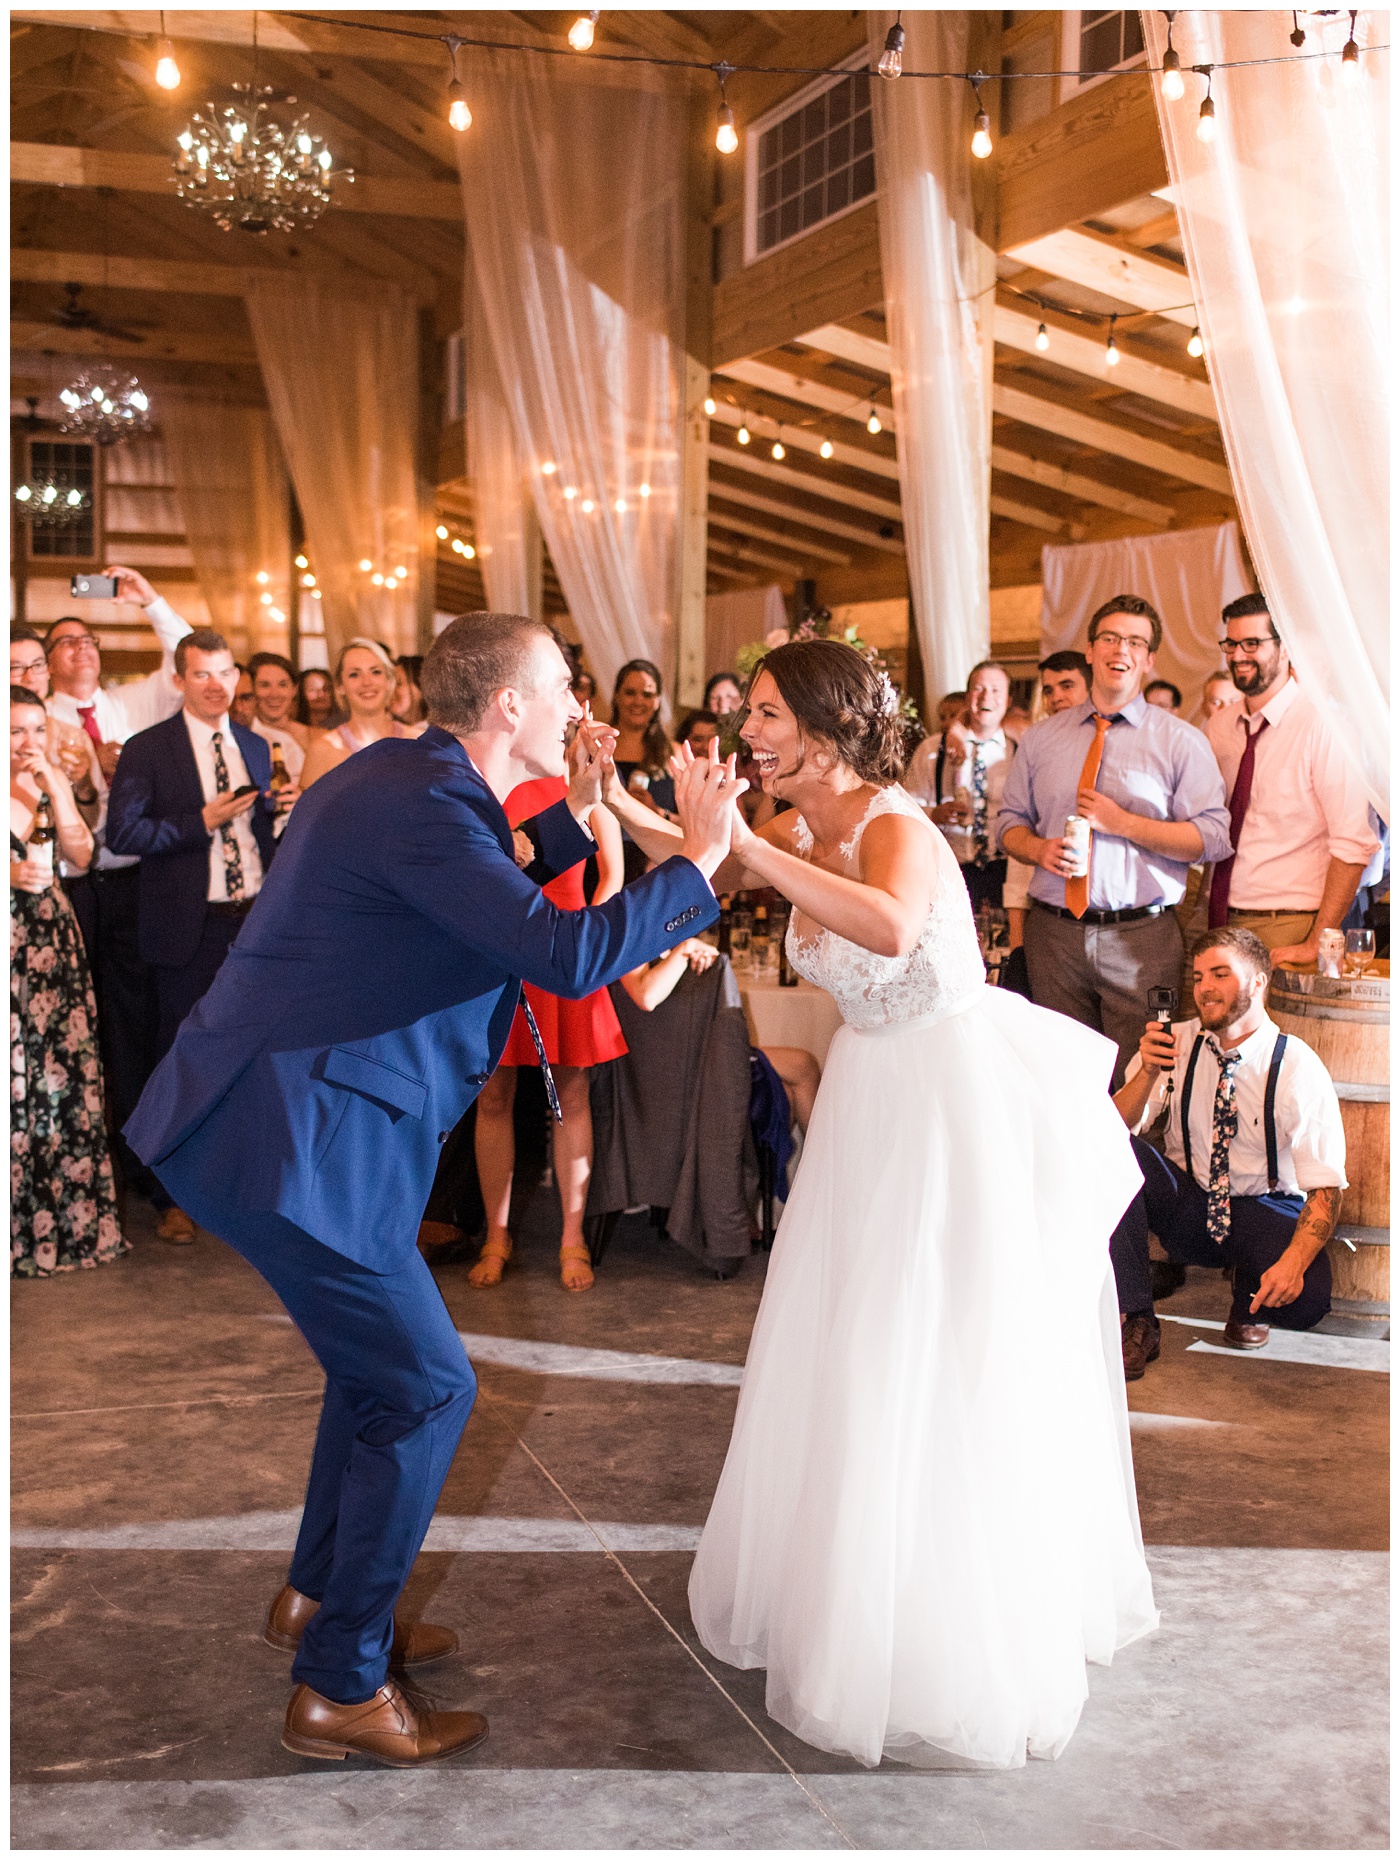 DelFosse Vineyard couple eating dancing during their reception